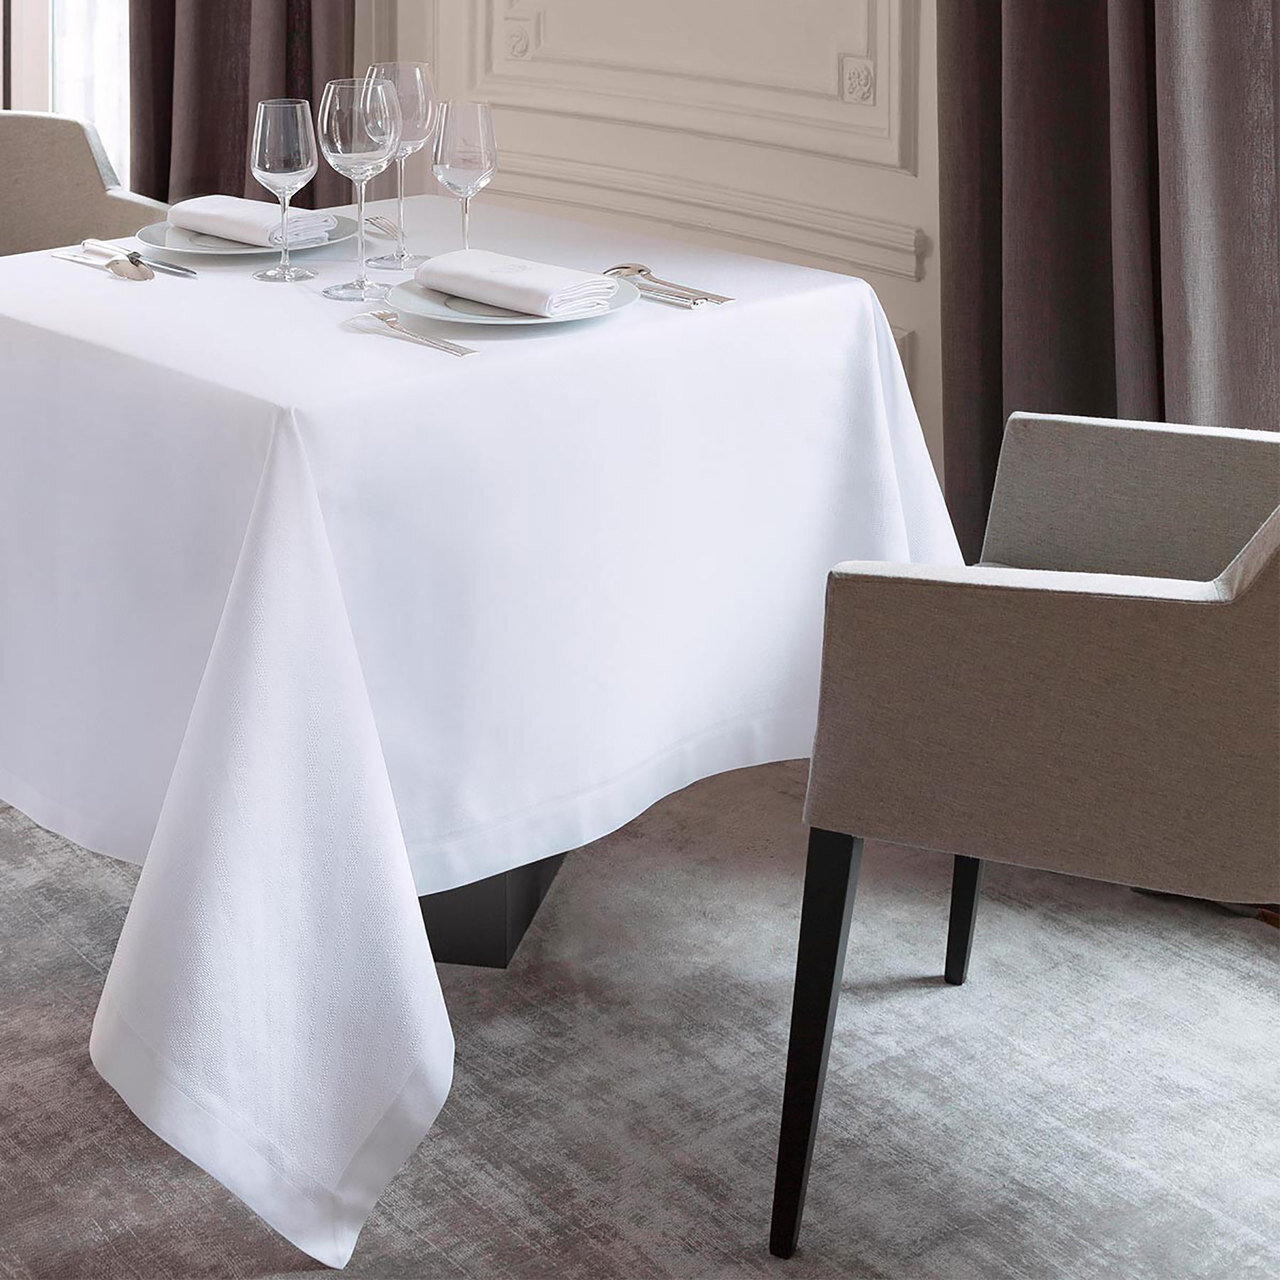 Le Jacquard Offre White Tiret Tablecloth 69x126